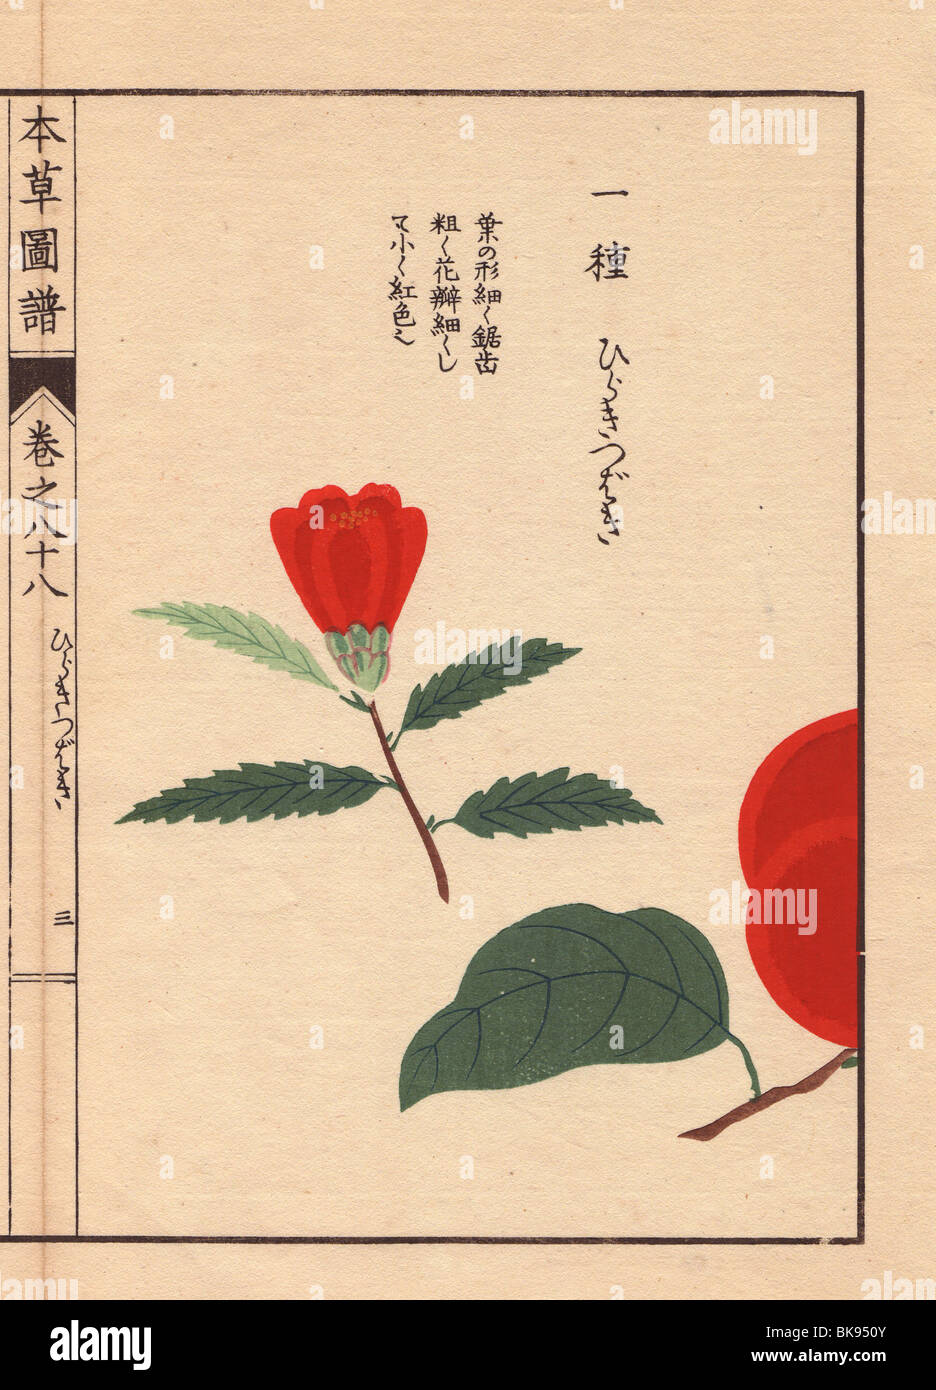 Camellia bud 'Hiraki tsubaki'   Thea japonica Nois. Stock Photo